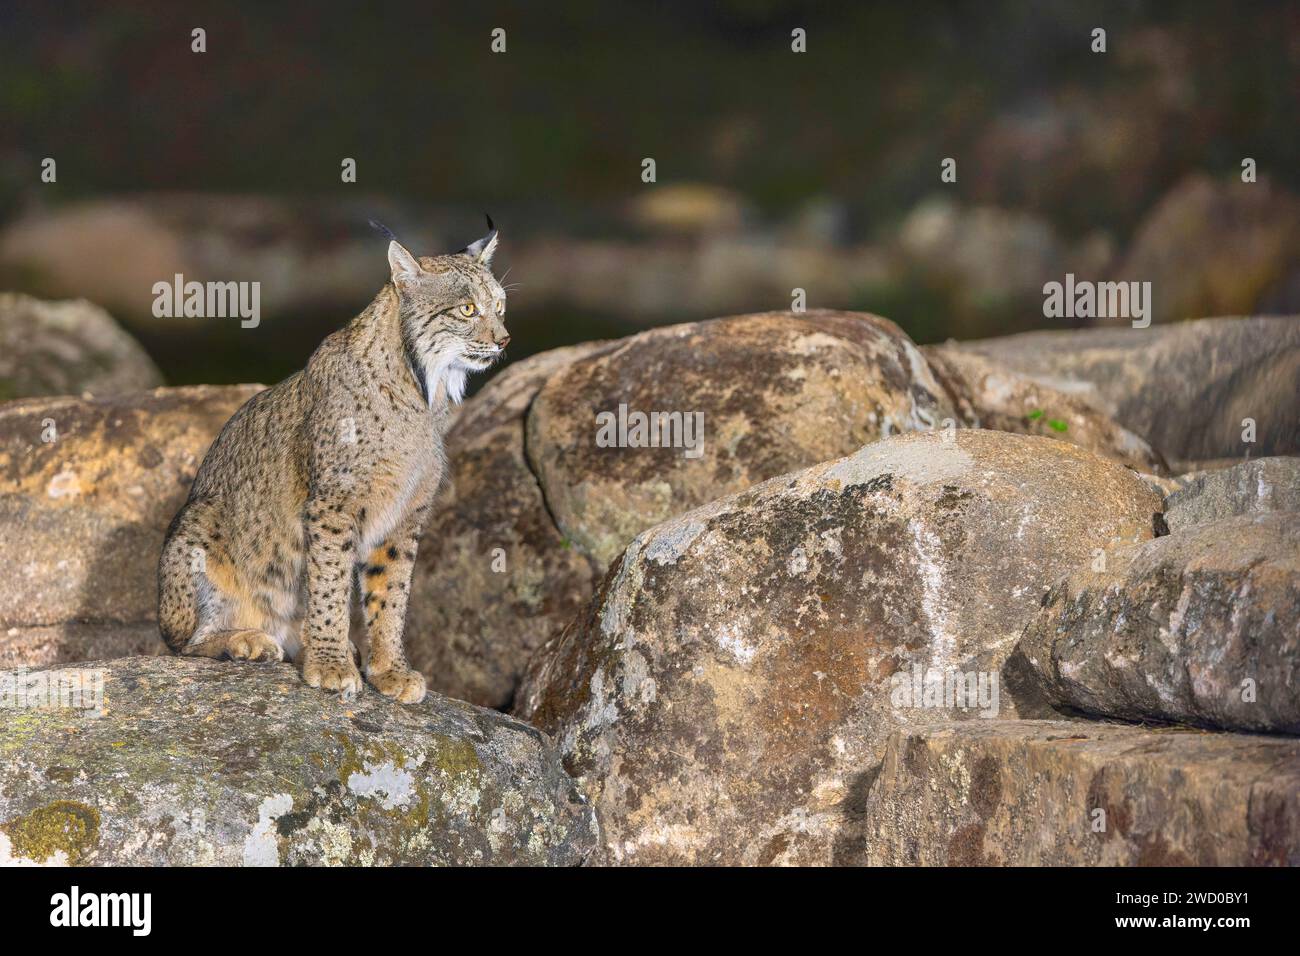 Der iberische Luchs (Lynx pardinus) liegt in einer felsigen Landschaft im Dunkeln, Spanien, Andalusien, Andujar, Sierra de Andujar Nationalpark Stockfoto